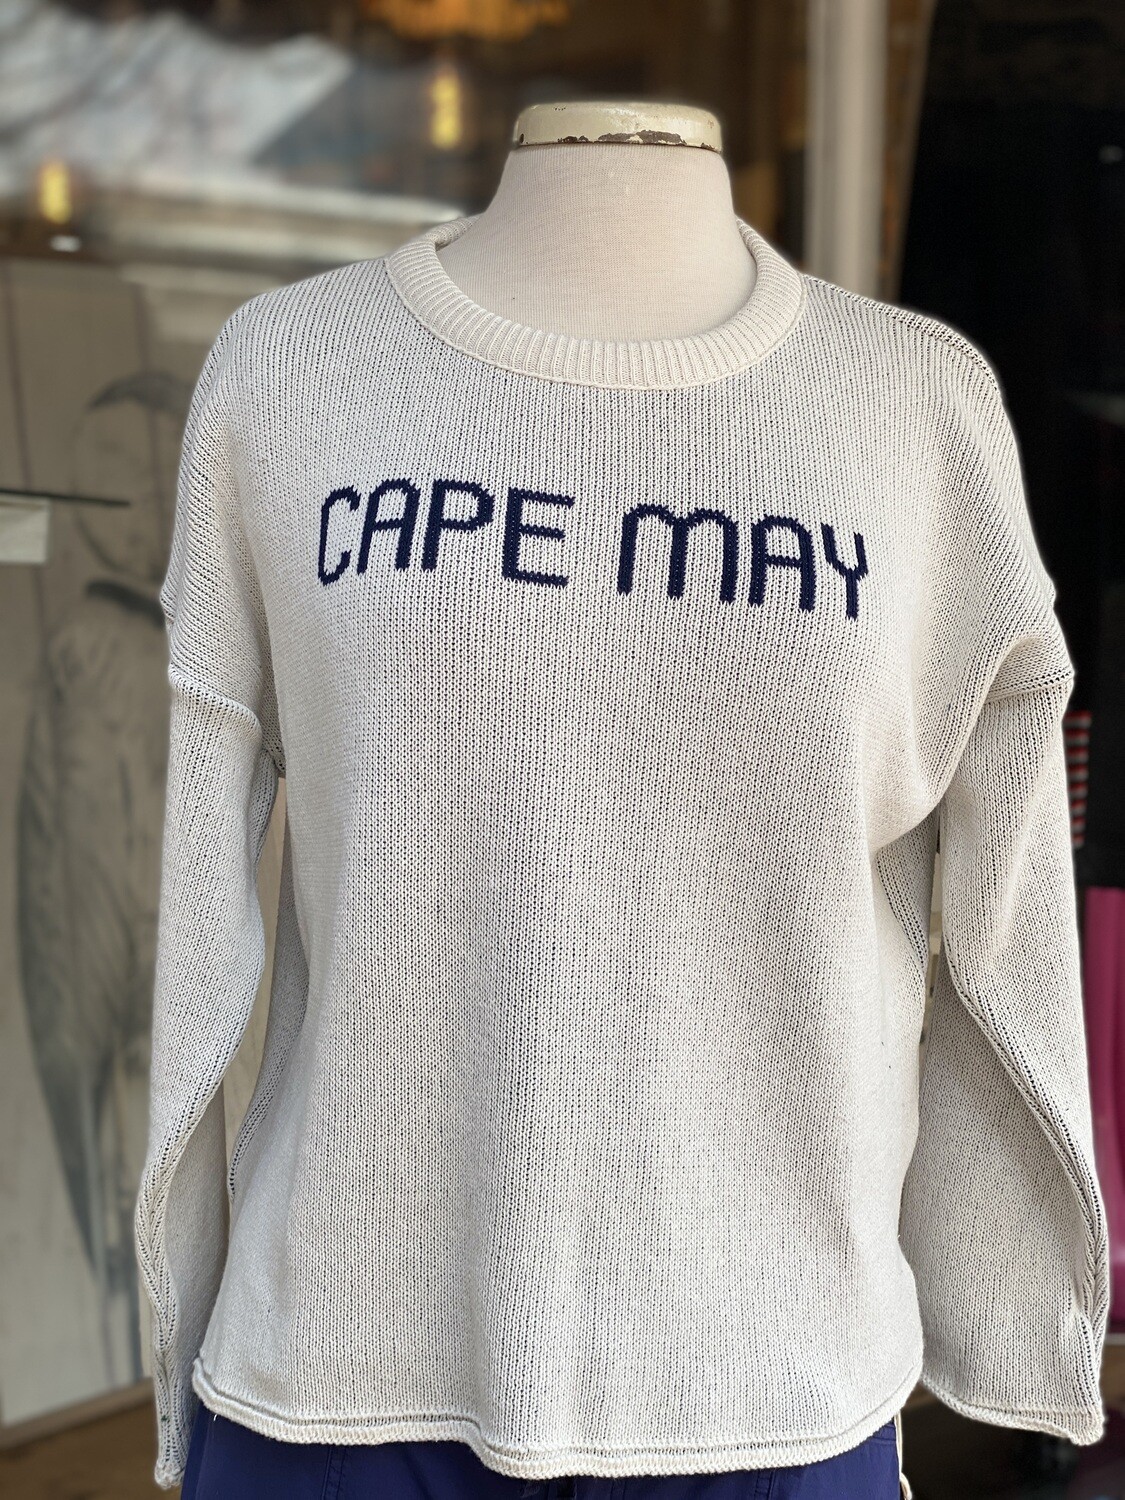 Boxy Cape May Sweater by Binghamton Knits